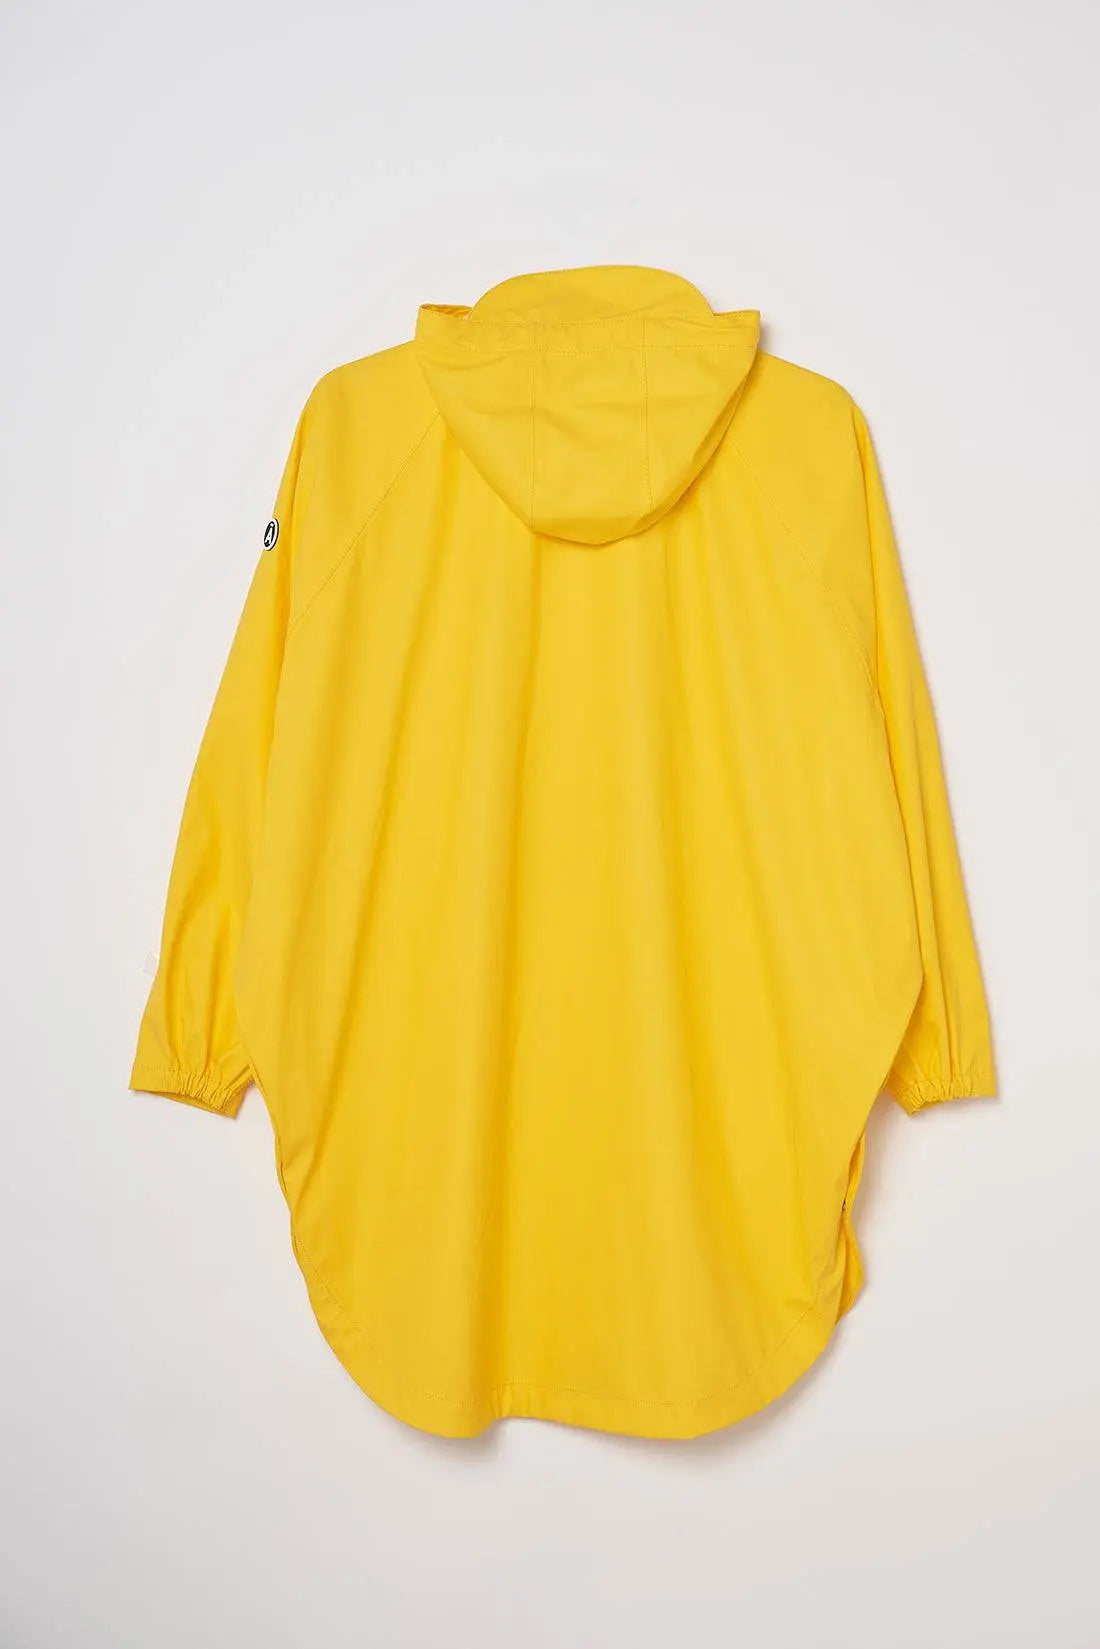 SKY. Chubasquero impermeable tipo capa amarillo unisex Tantä.